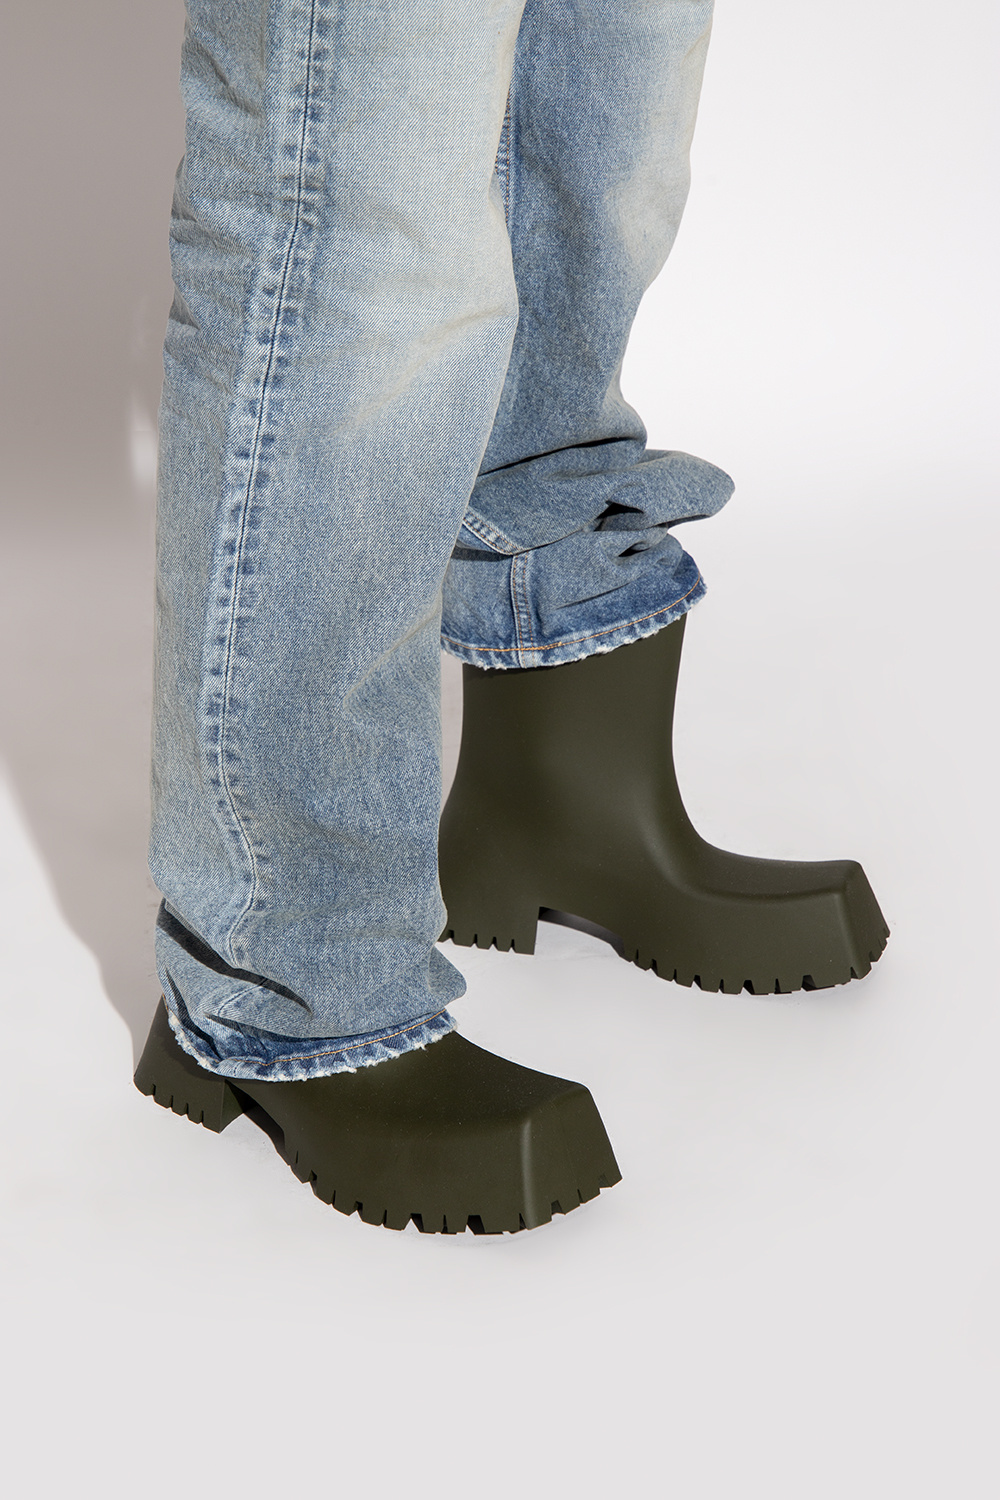 Green 'Trooper' rain boots Balenciaga - Vitkac Canada